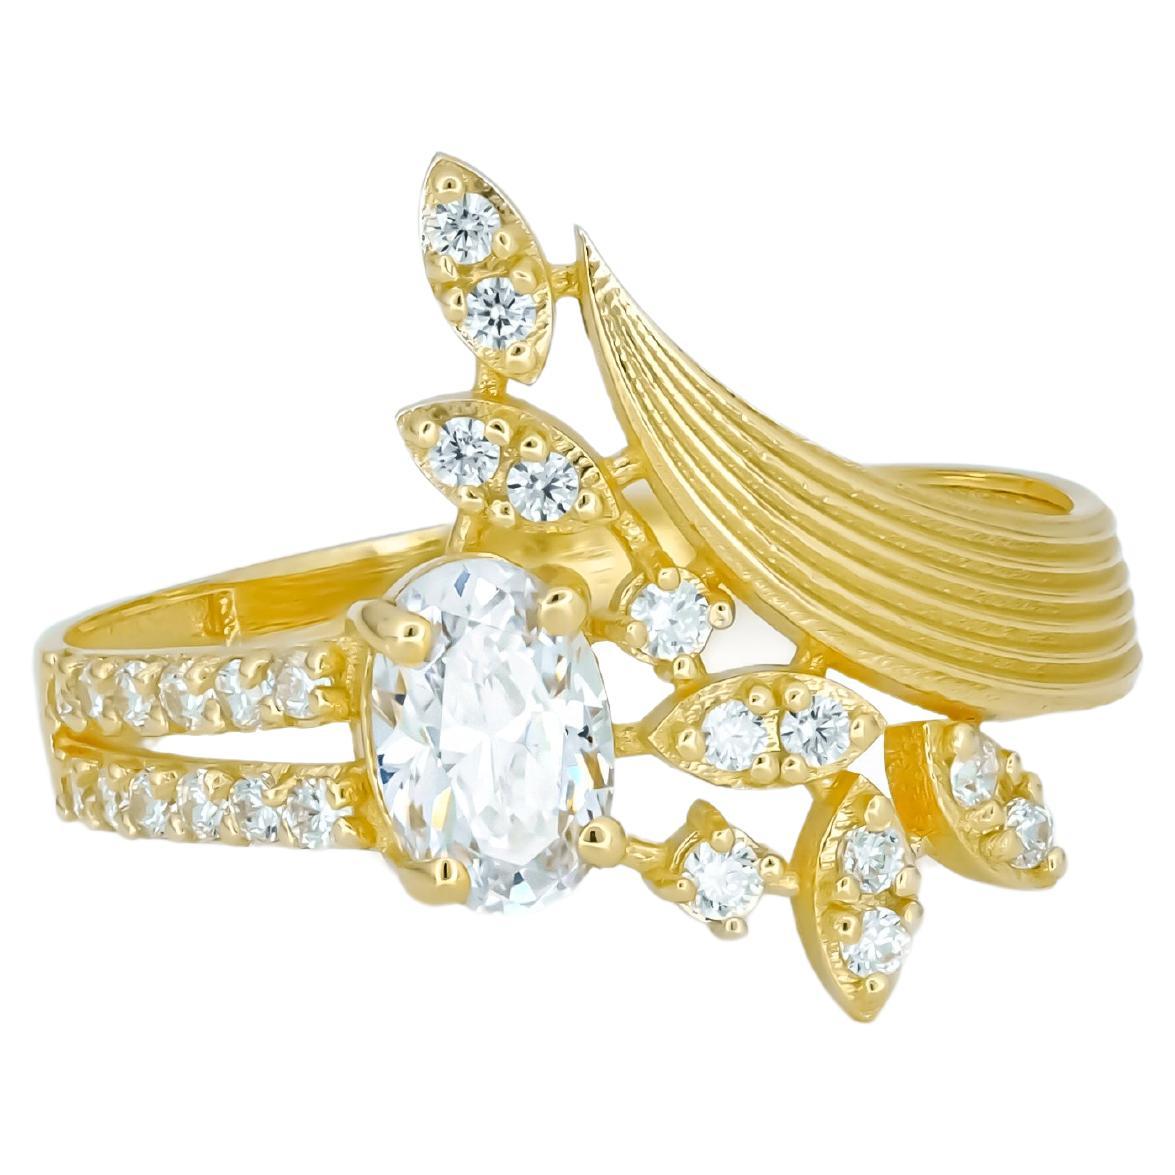 For Sale:  Oval cut moissanite 14k gold ring.